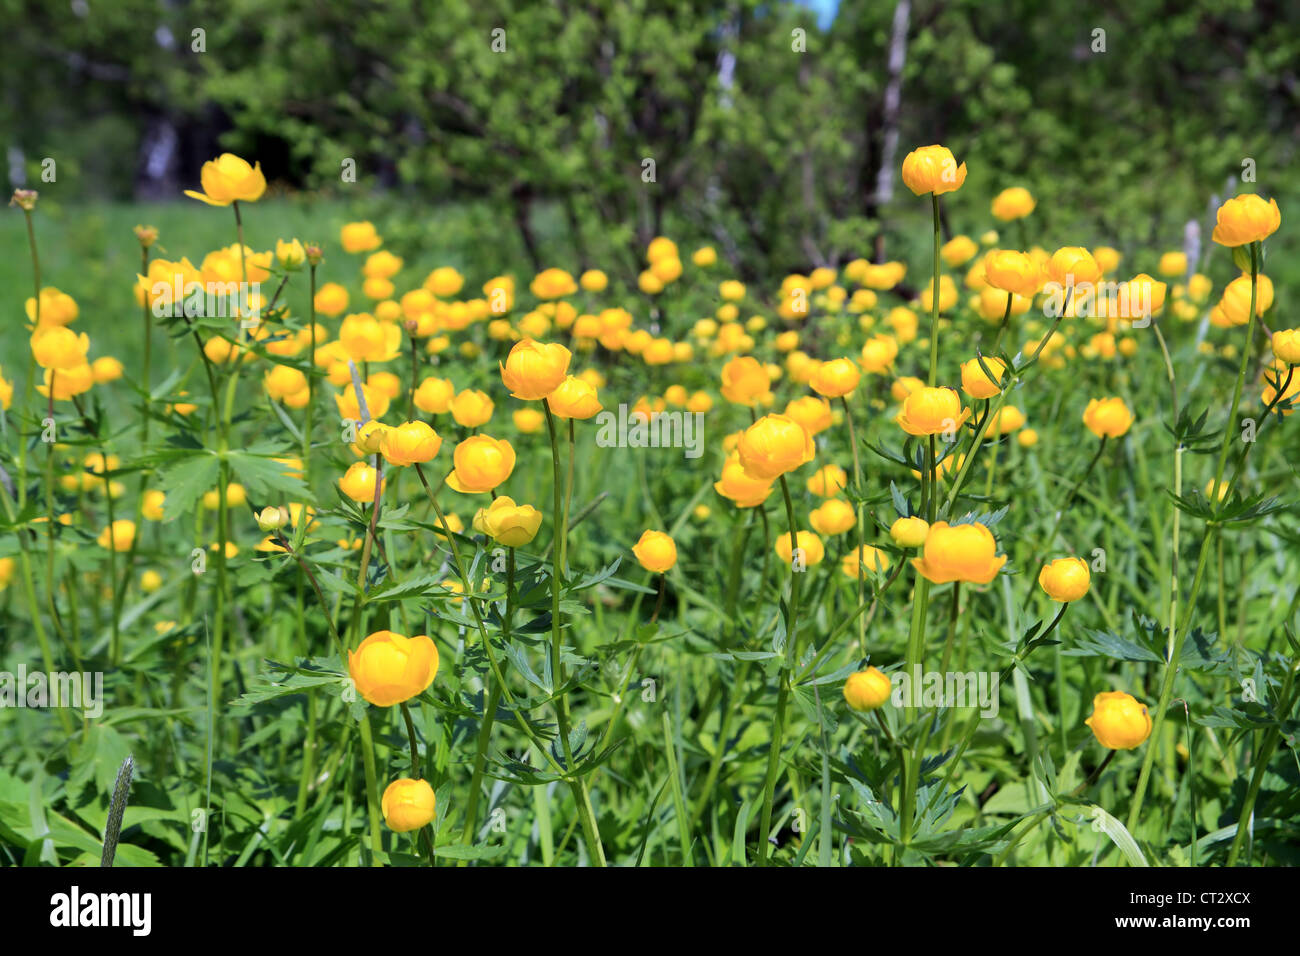 globe-flower on spring green field Stock Photo